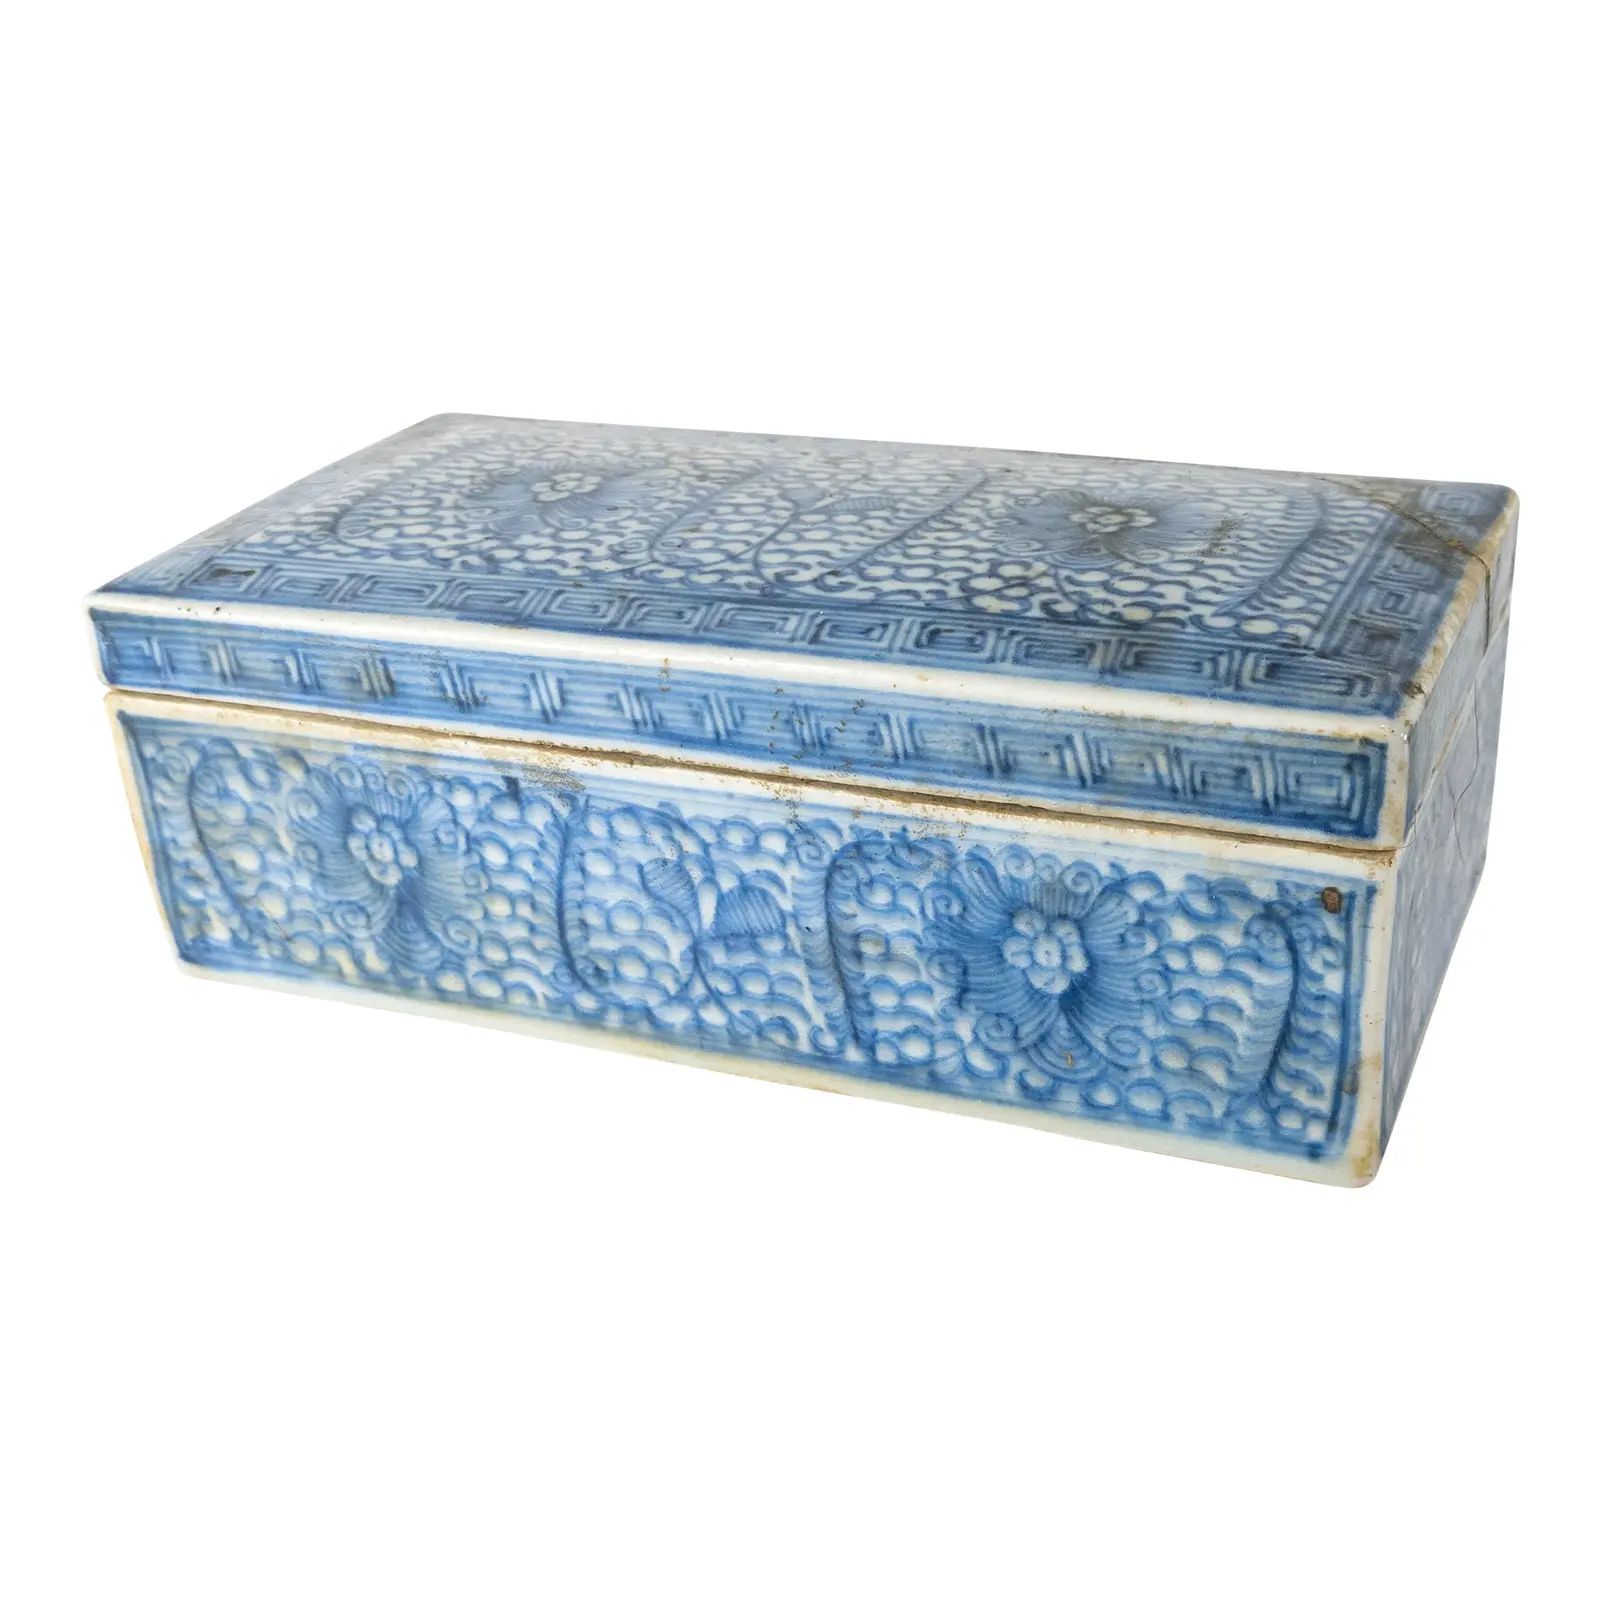 19th Century Chinese Chinoiserie Blue and White Covered Box With Repair | Chairish